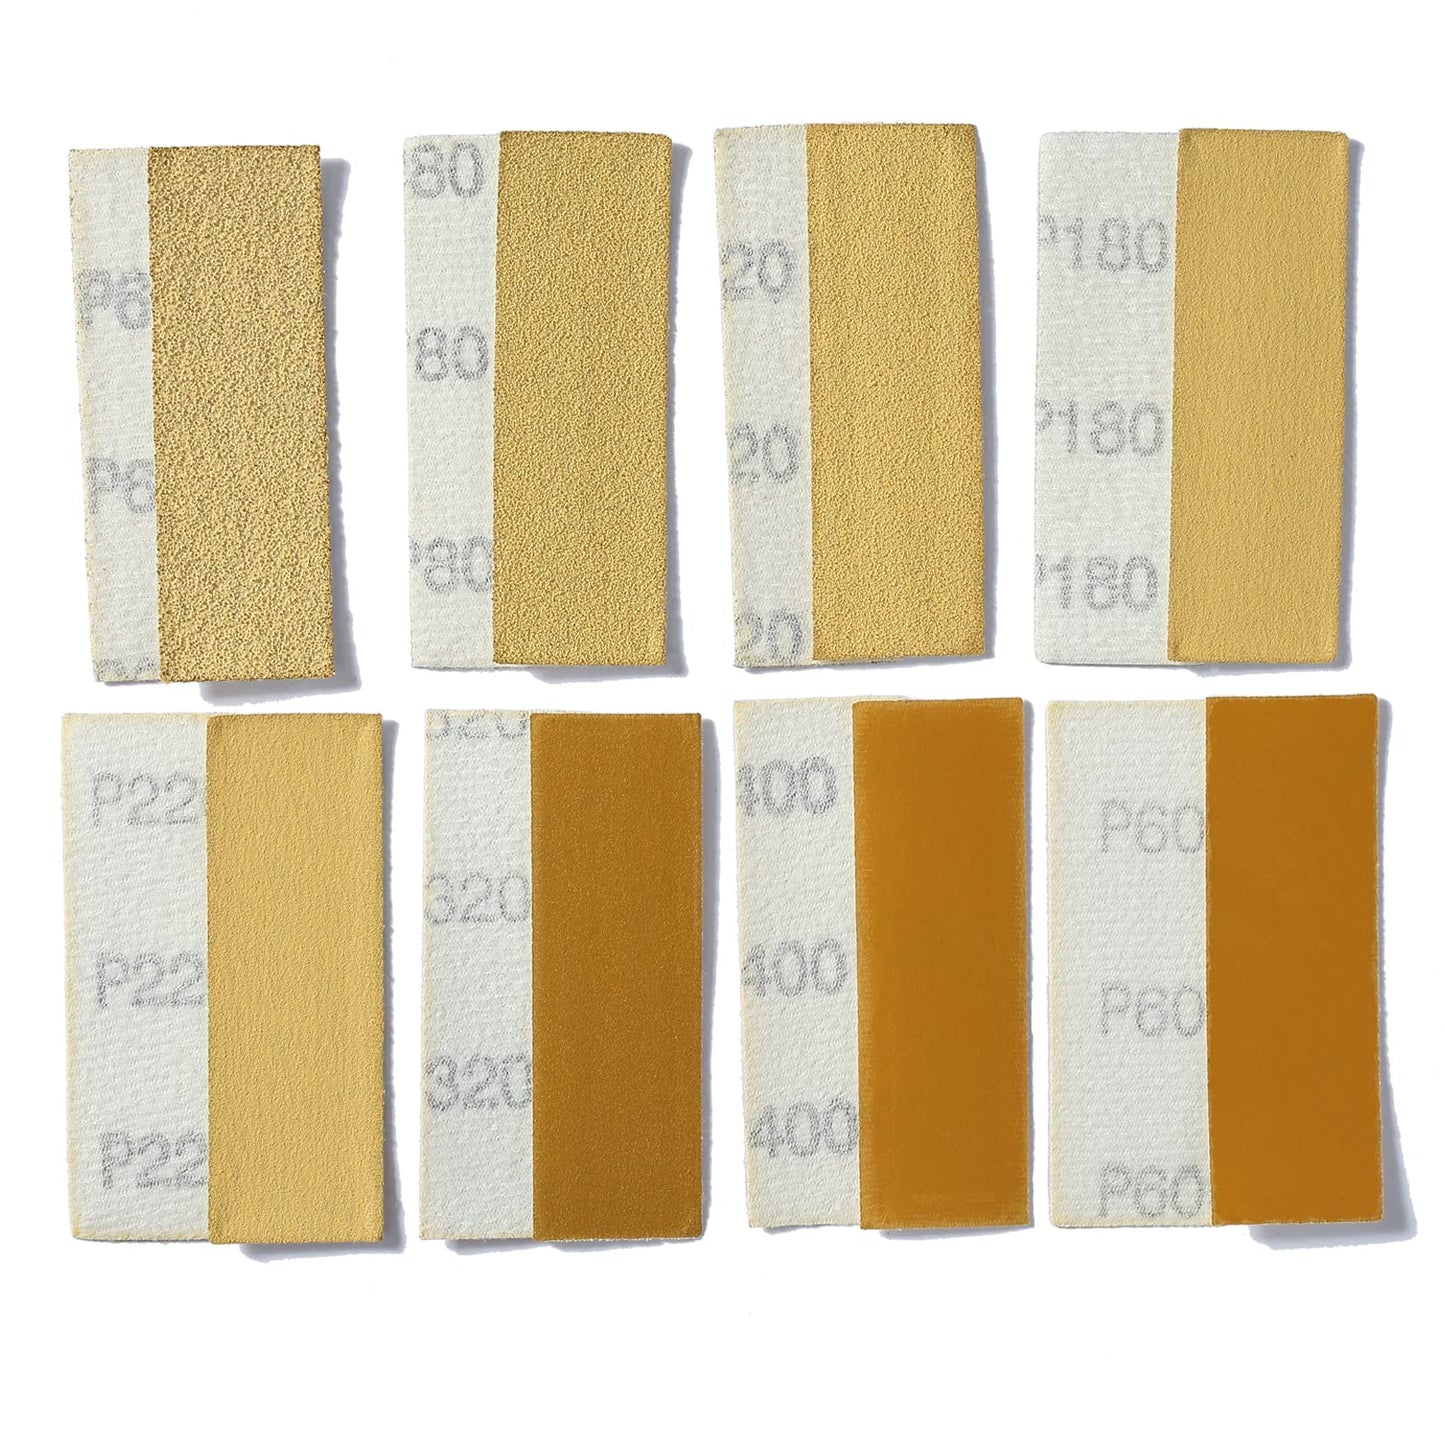 80 PCS Micro Detail Sander Paper Set, 3.5”x 1” Mini Hand Sanding Block, Hook and Loop Sandpaper Strips 60 to 600 Grit, Finger Sanding Tool for Wood